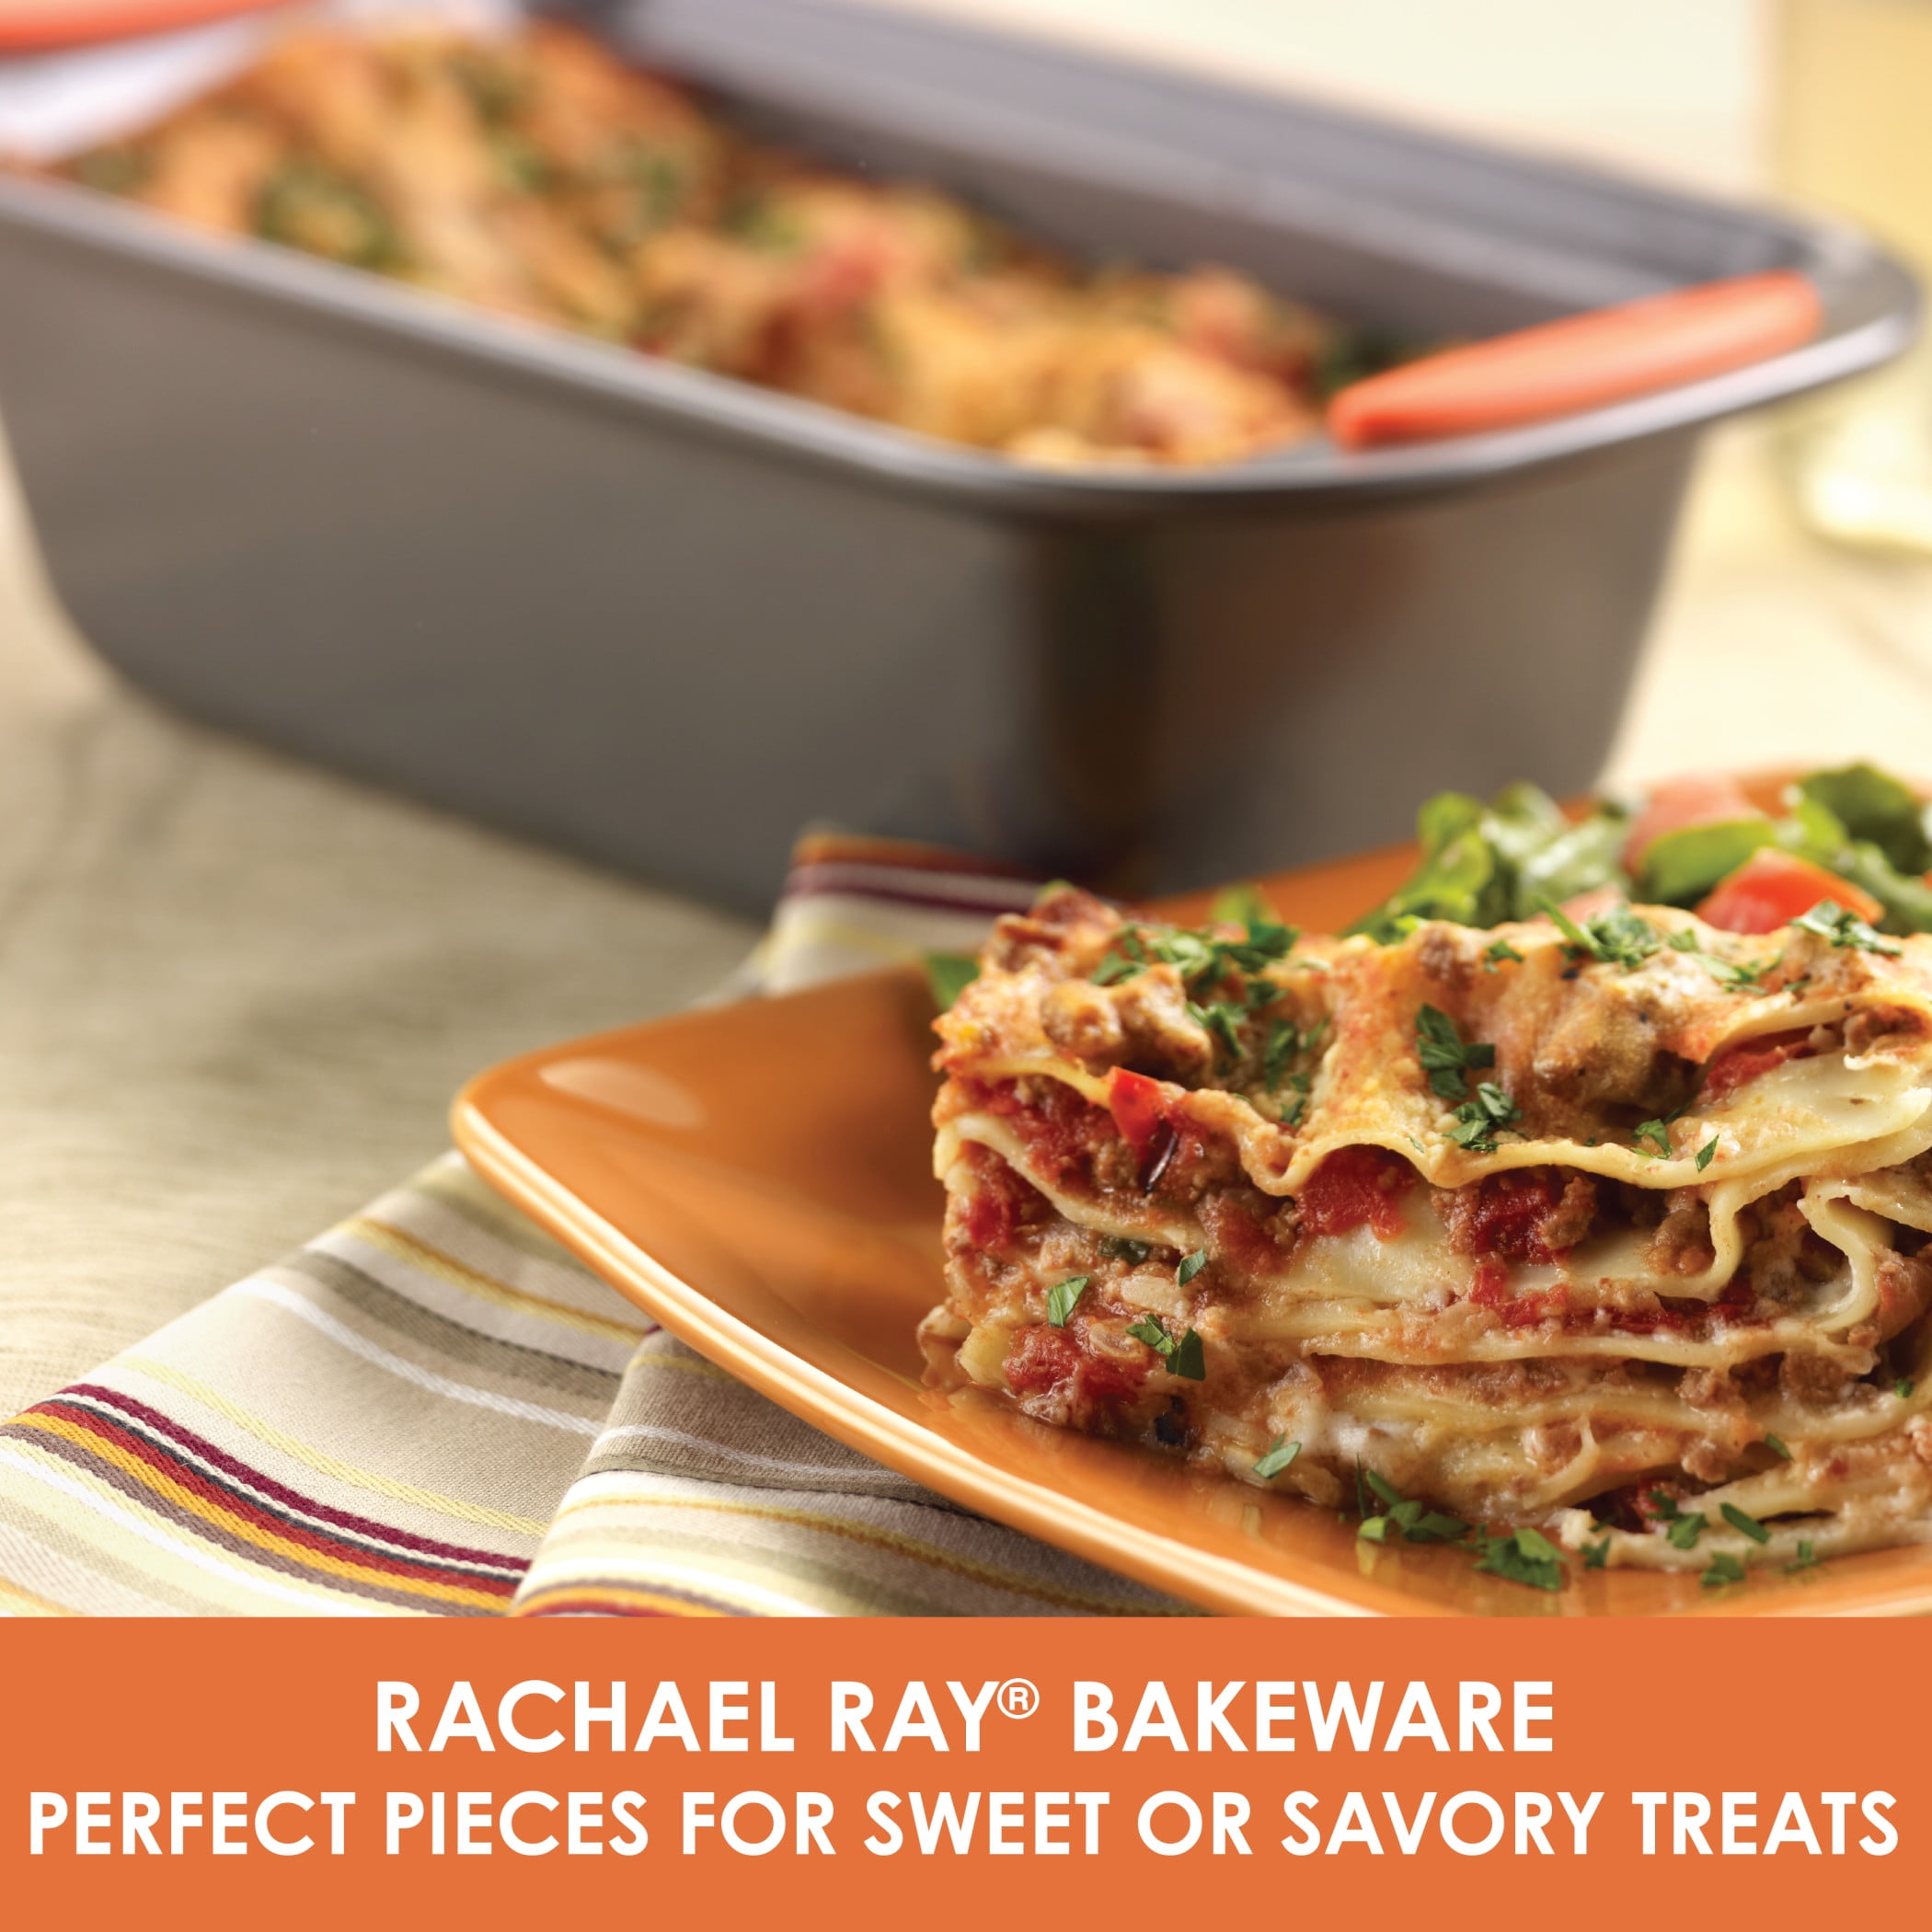 Rachael Ray Oven Lovin' Cake Pan, Rectangle, 9 Inch x 13 Inch